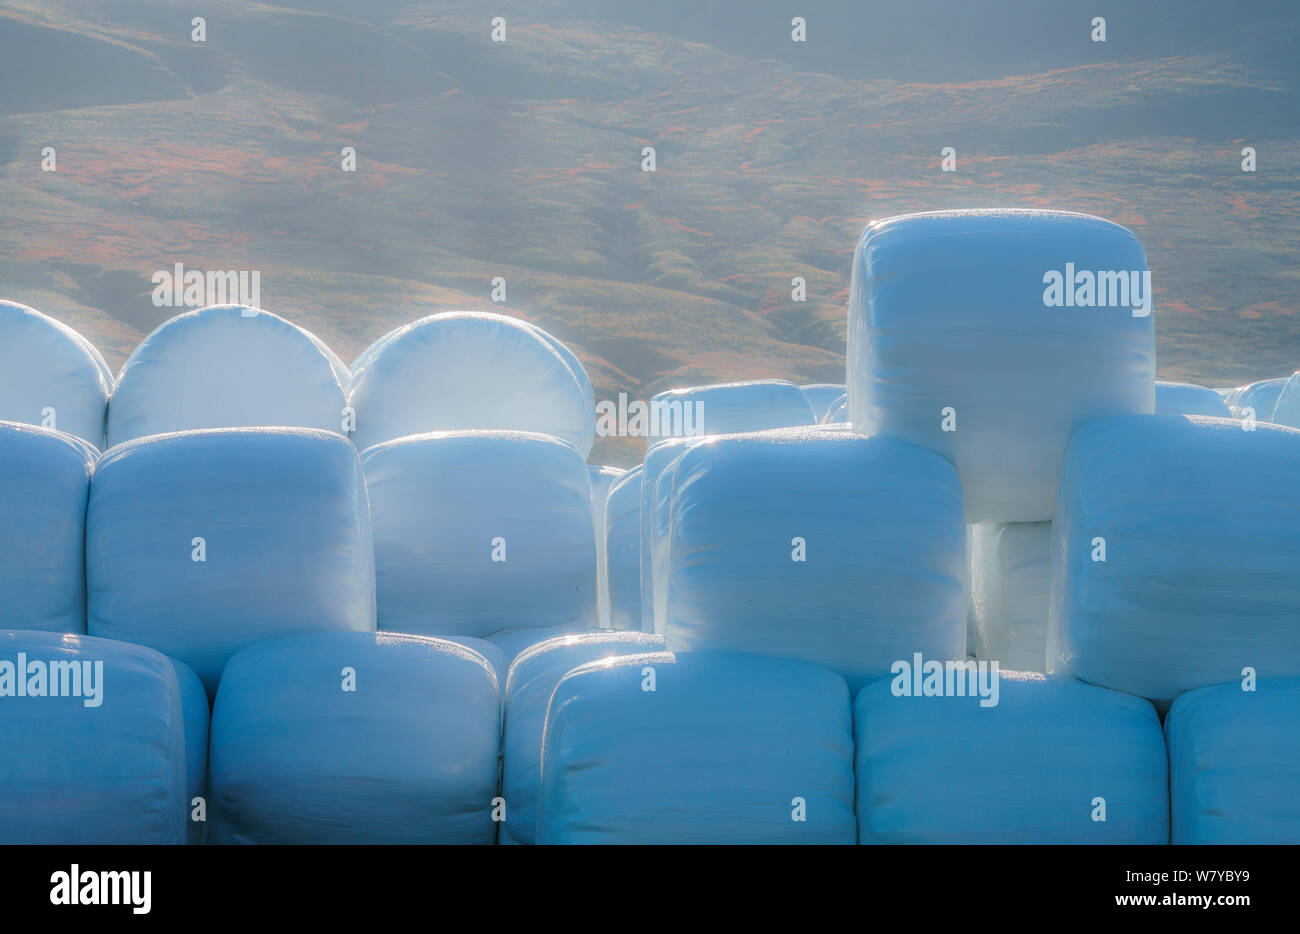 Hay rotoli impilati e avvolti in materiale plastico, Islanda Foto Stock